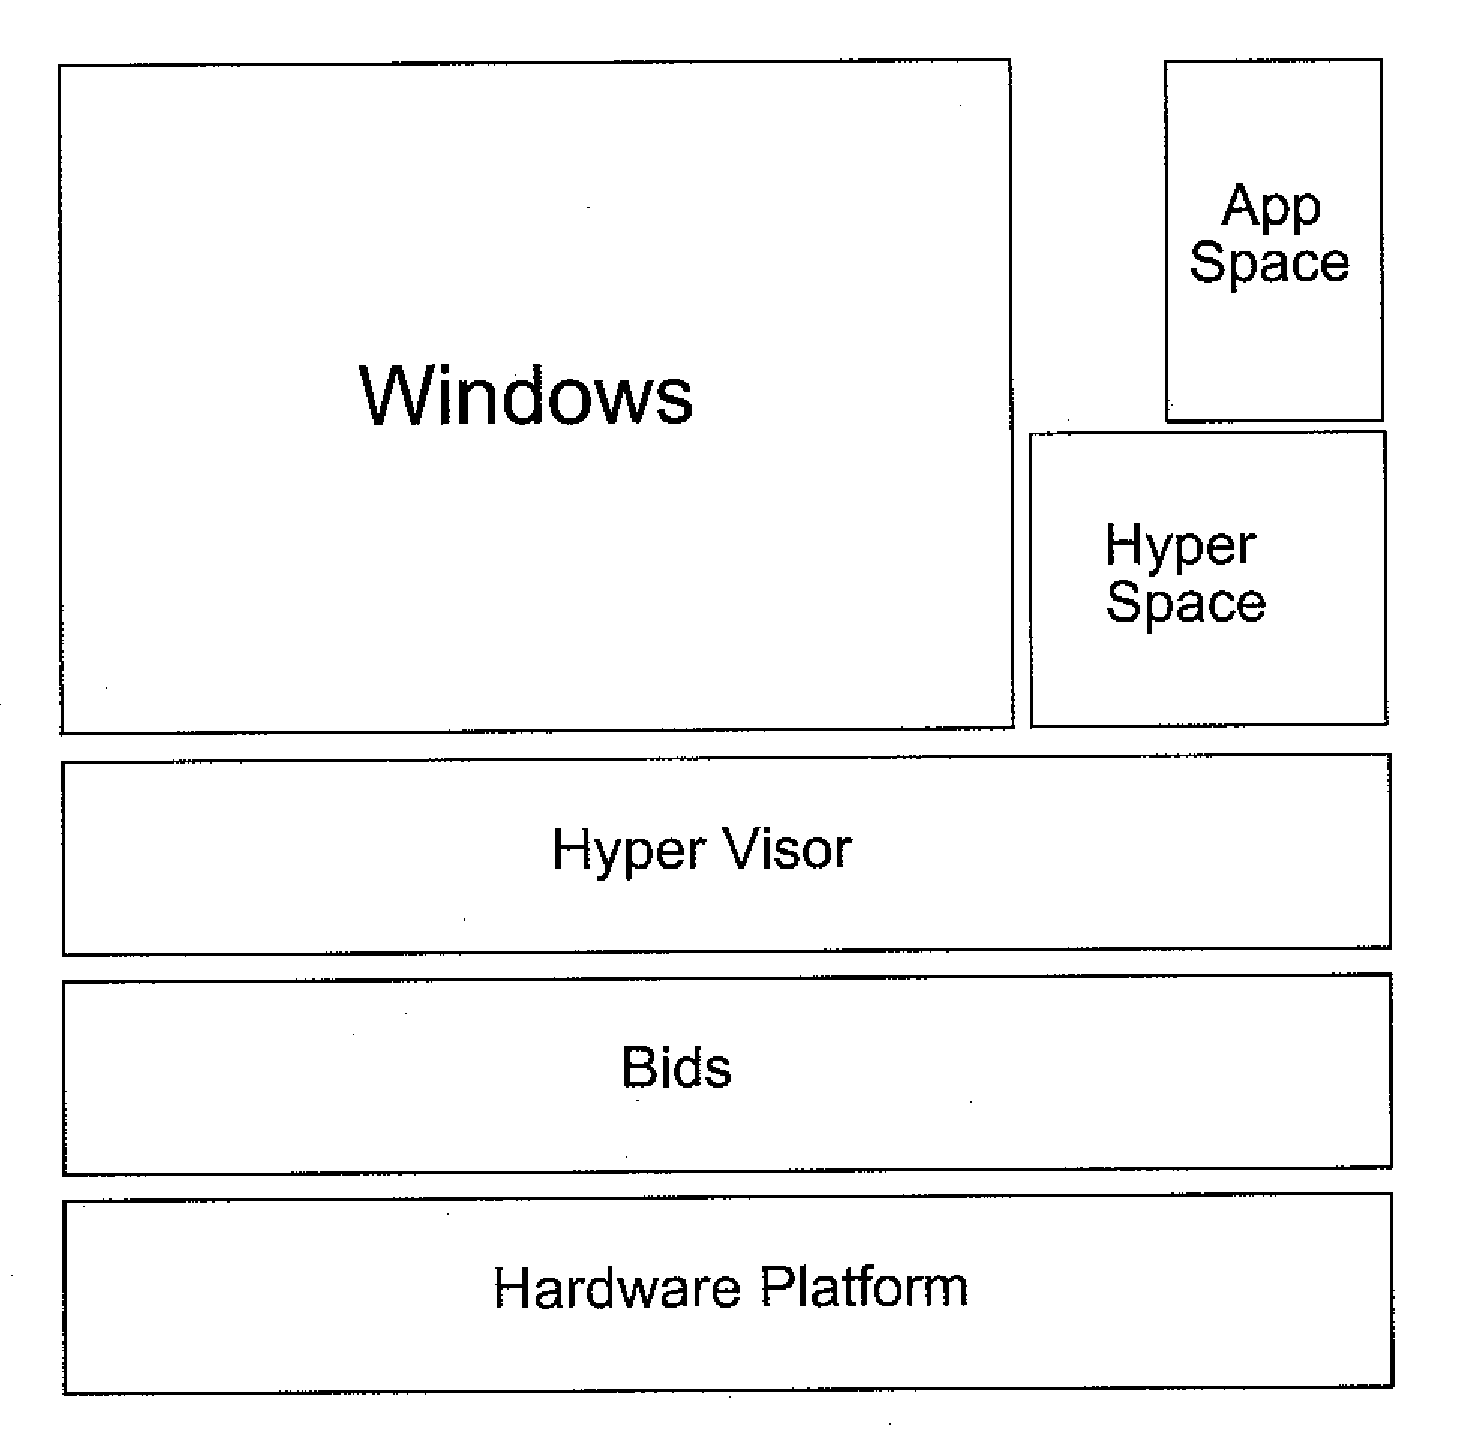 Hypervisor and virtual machine ware